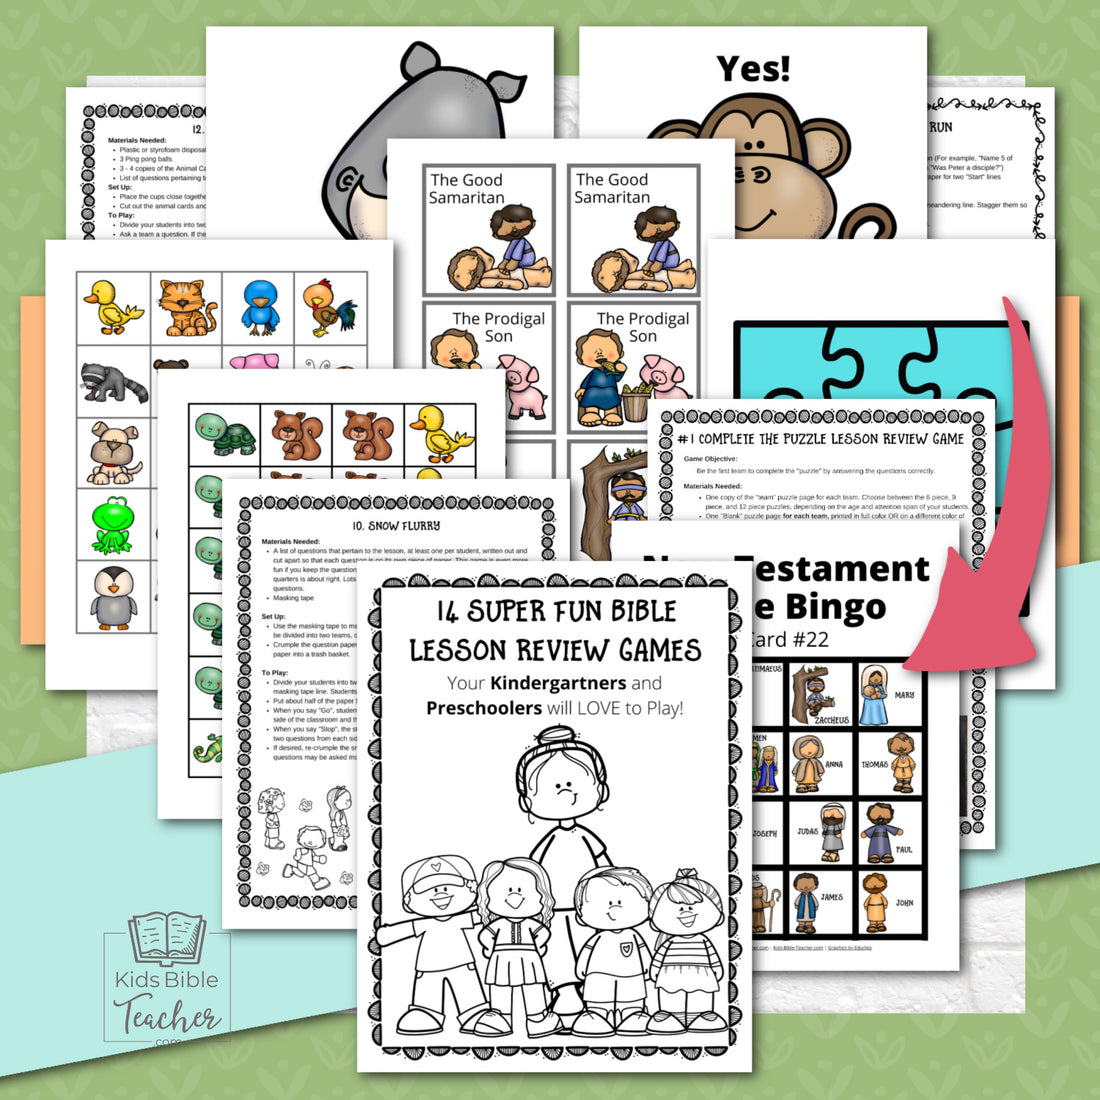 14 SUPER FUN Bible Lesson Review Games for Preschool and Kindergarten